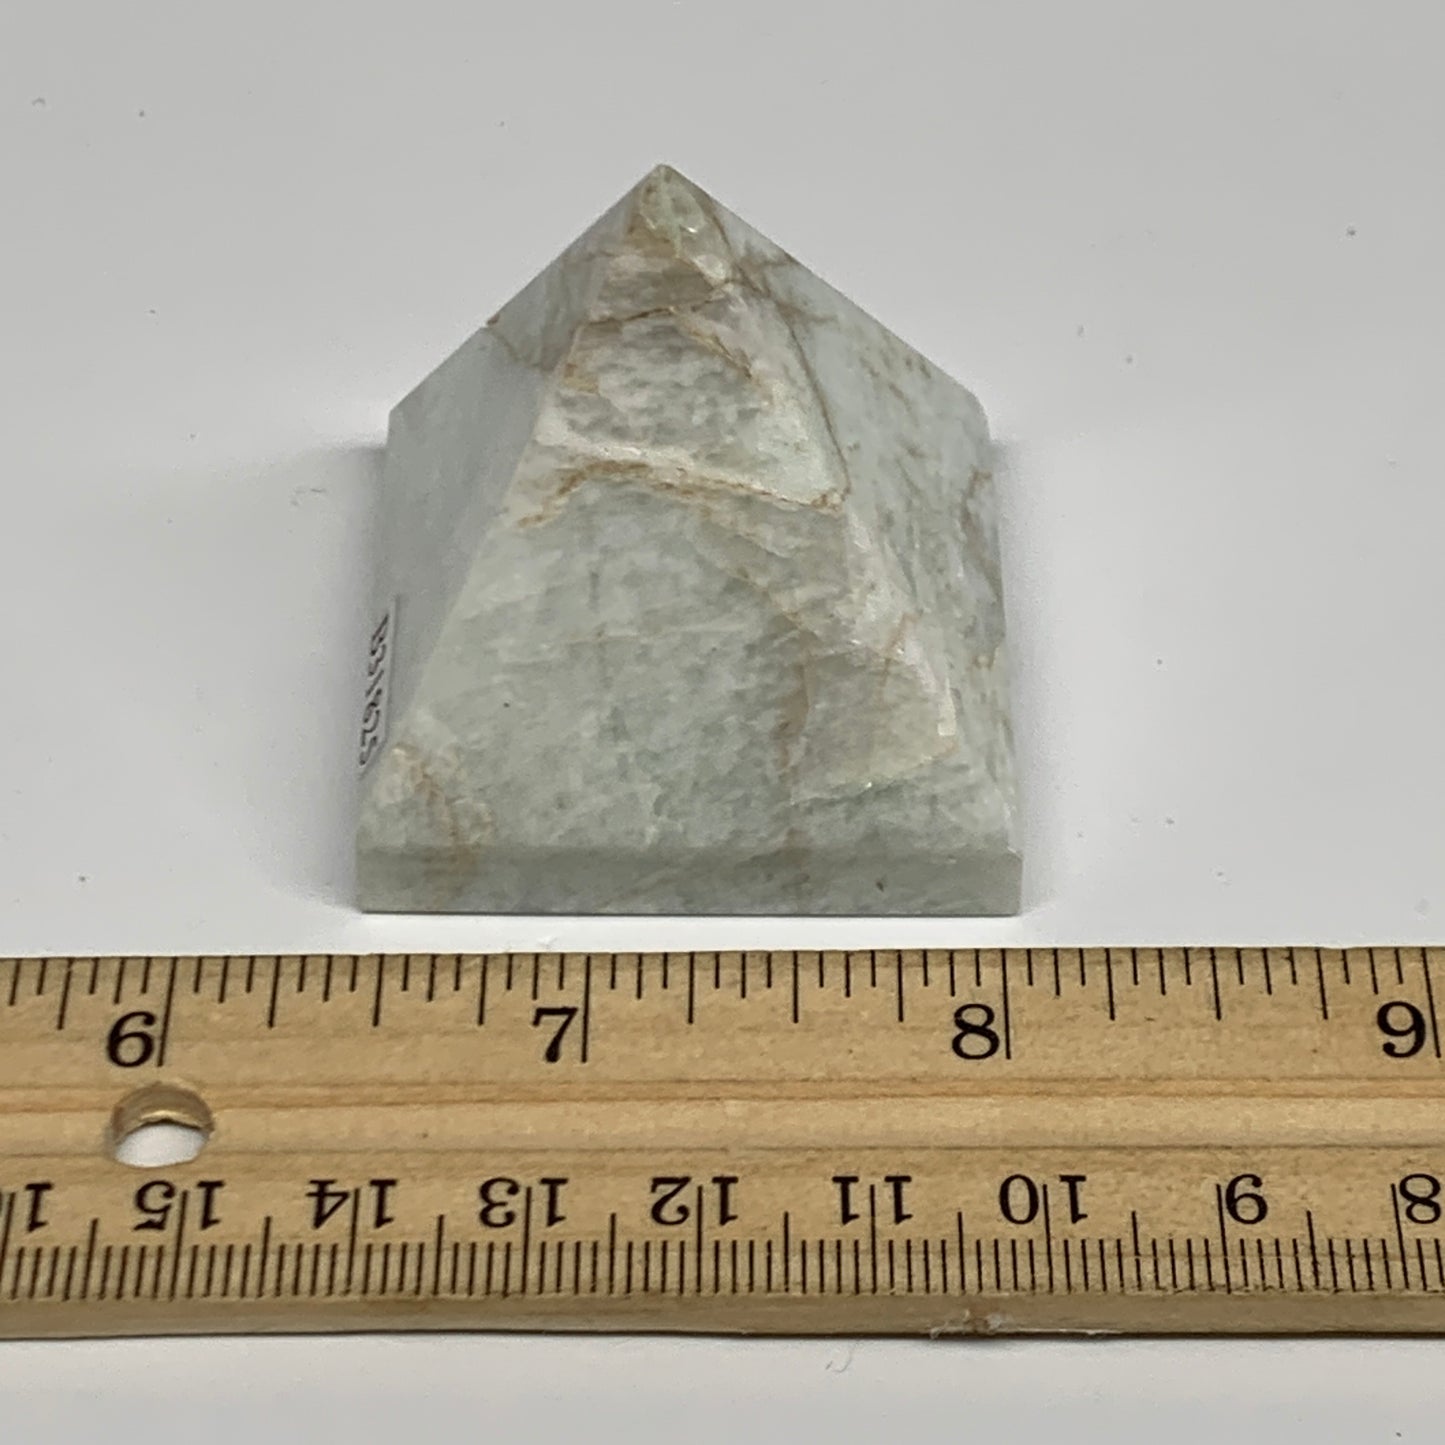 86.6g, 1.7"x1.6"x1.6", Amazonite Pyramid Gemstone, Decorative Stone, B31825